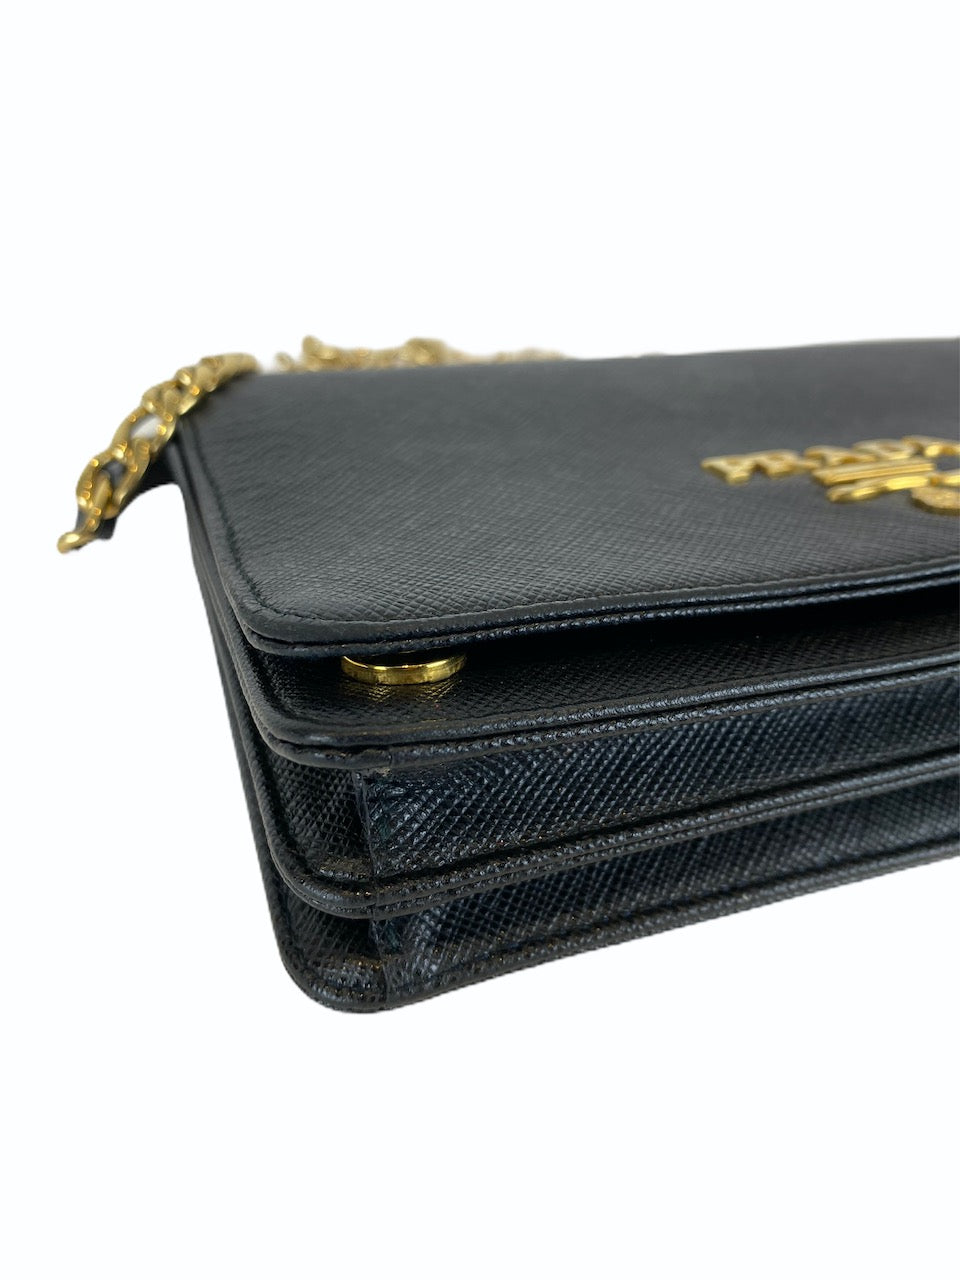 Prada Black Saffiano Leather Wallet on Chain - As Seen on Instagram 2/9/20 - Siopaella Designer Exchange